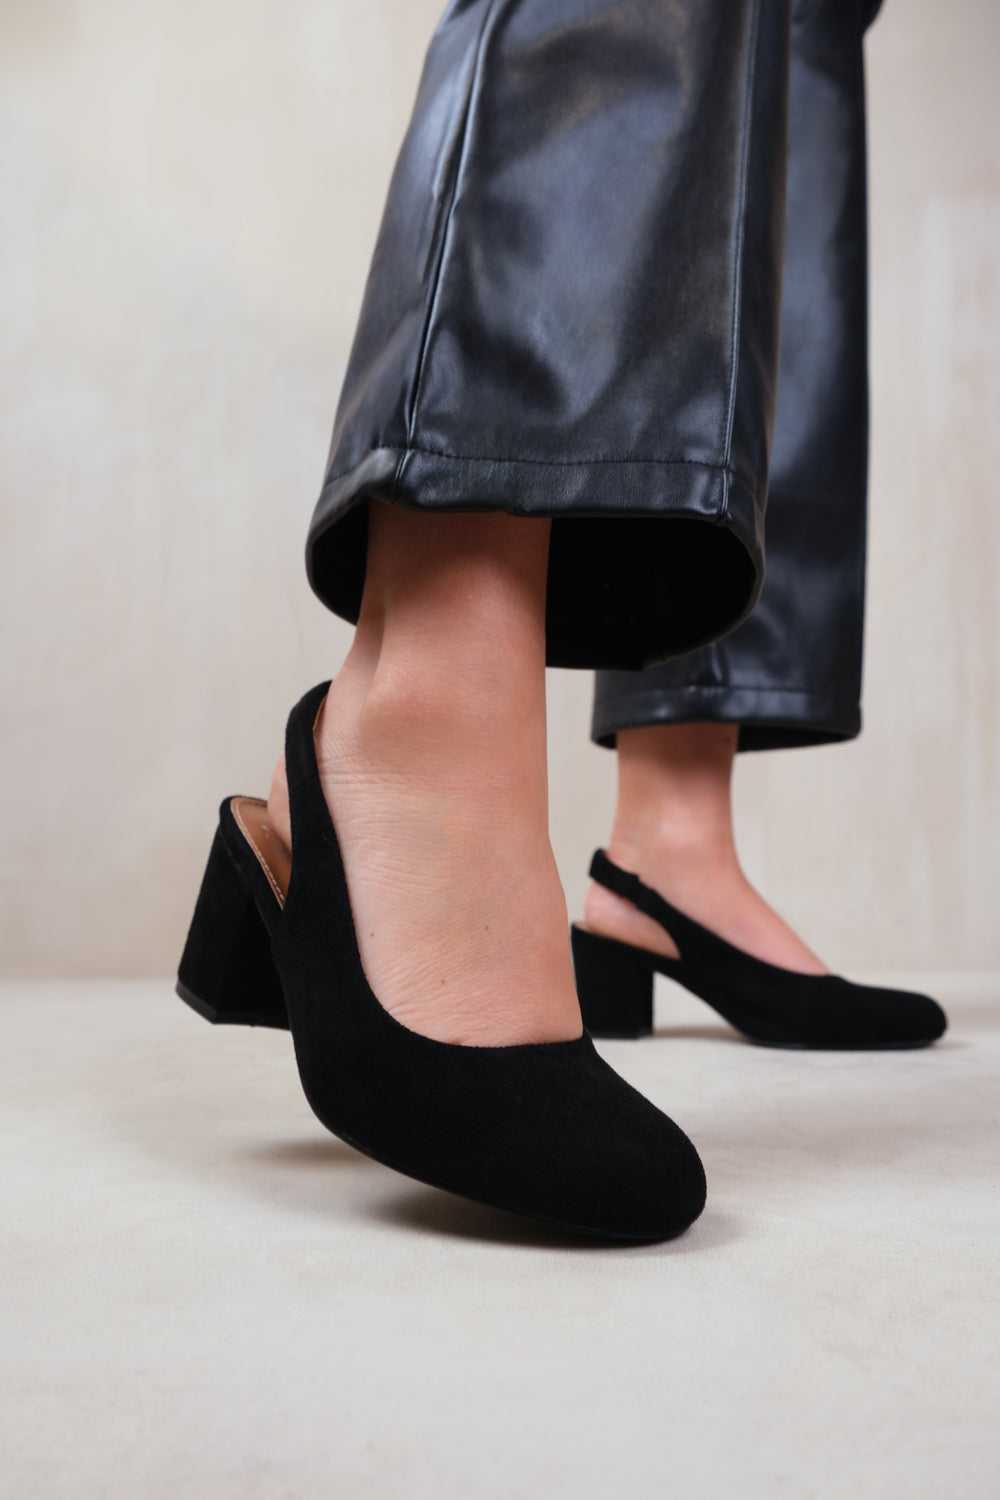 Butter Shoes Women's Novella Block Heeled Pump in Black Suede